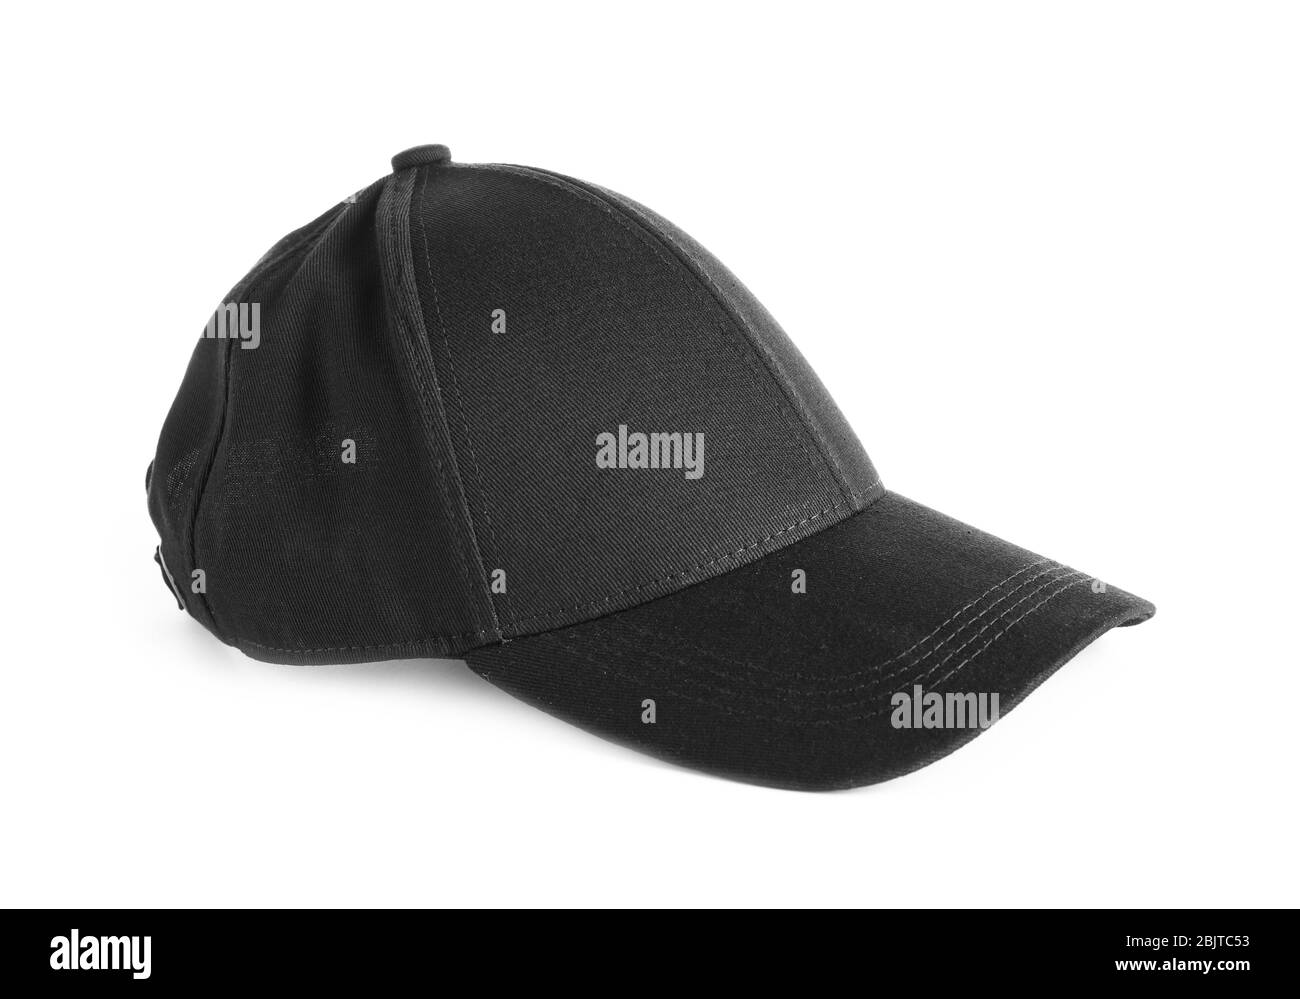 Gorra negra Imágenes recortadas de stock - Página 3 - Alamy